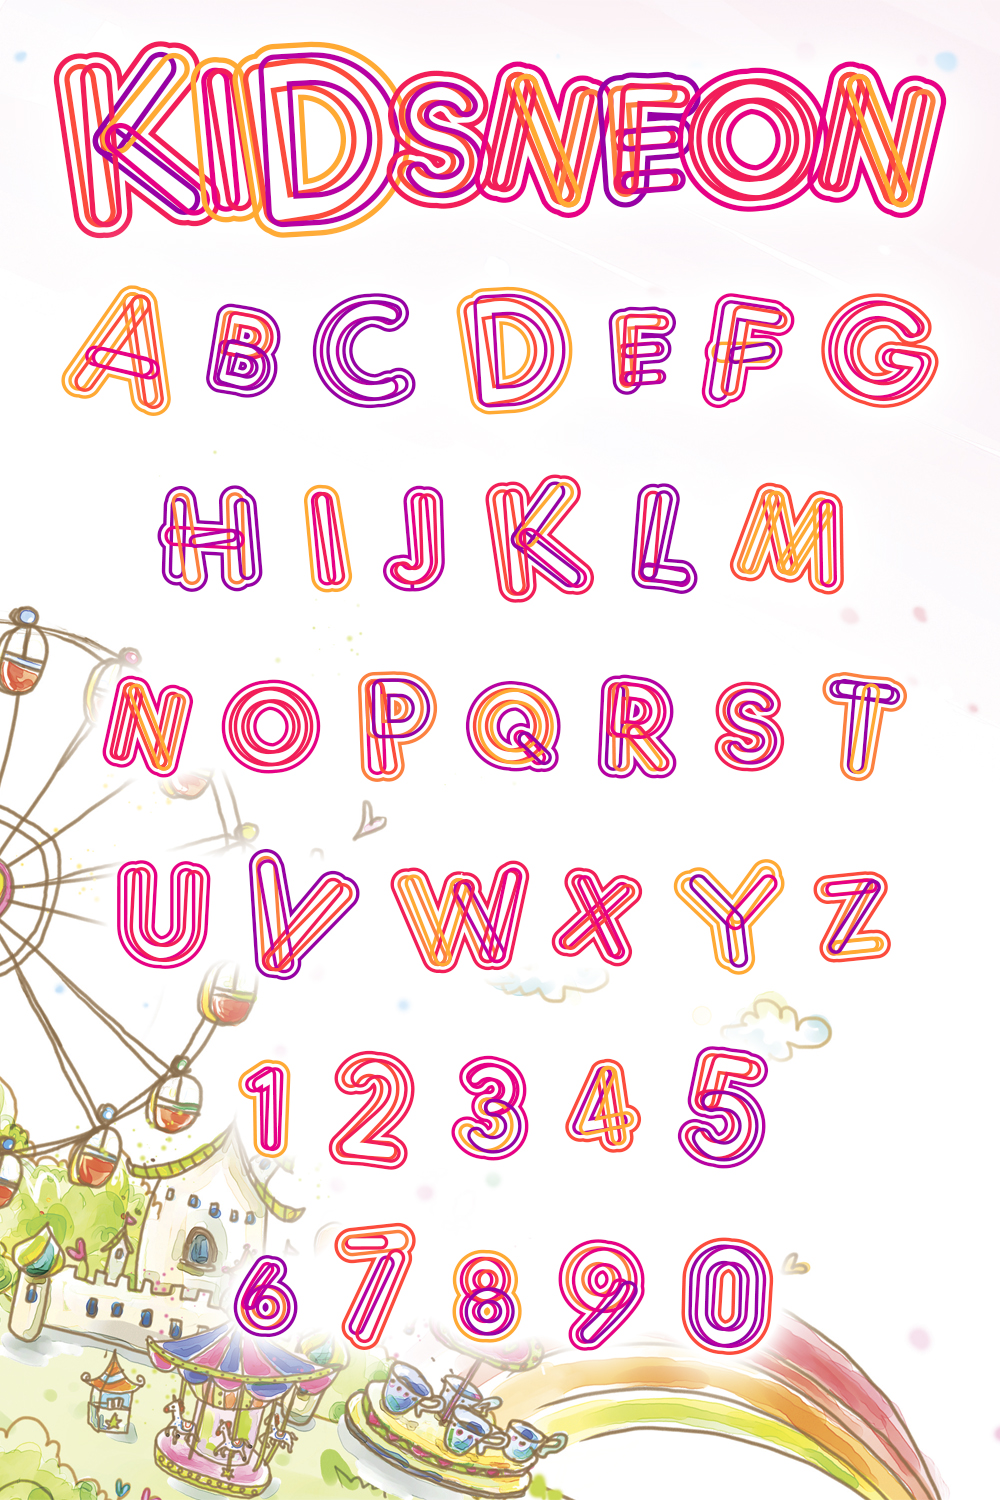 Kidsneon font of pinterest.